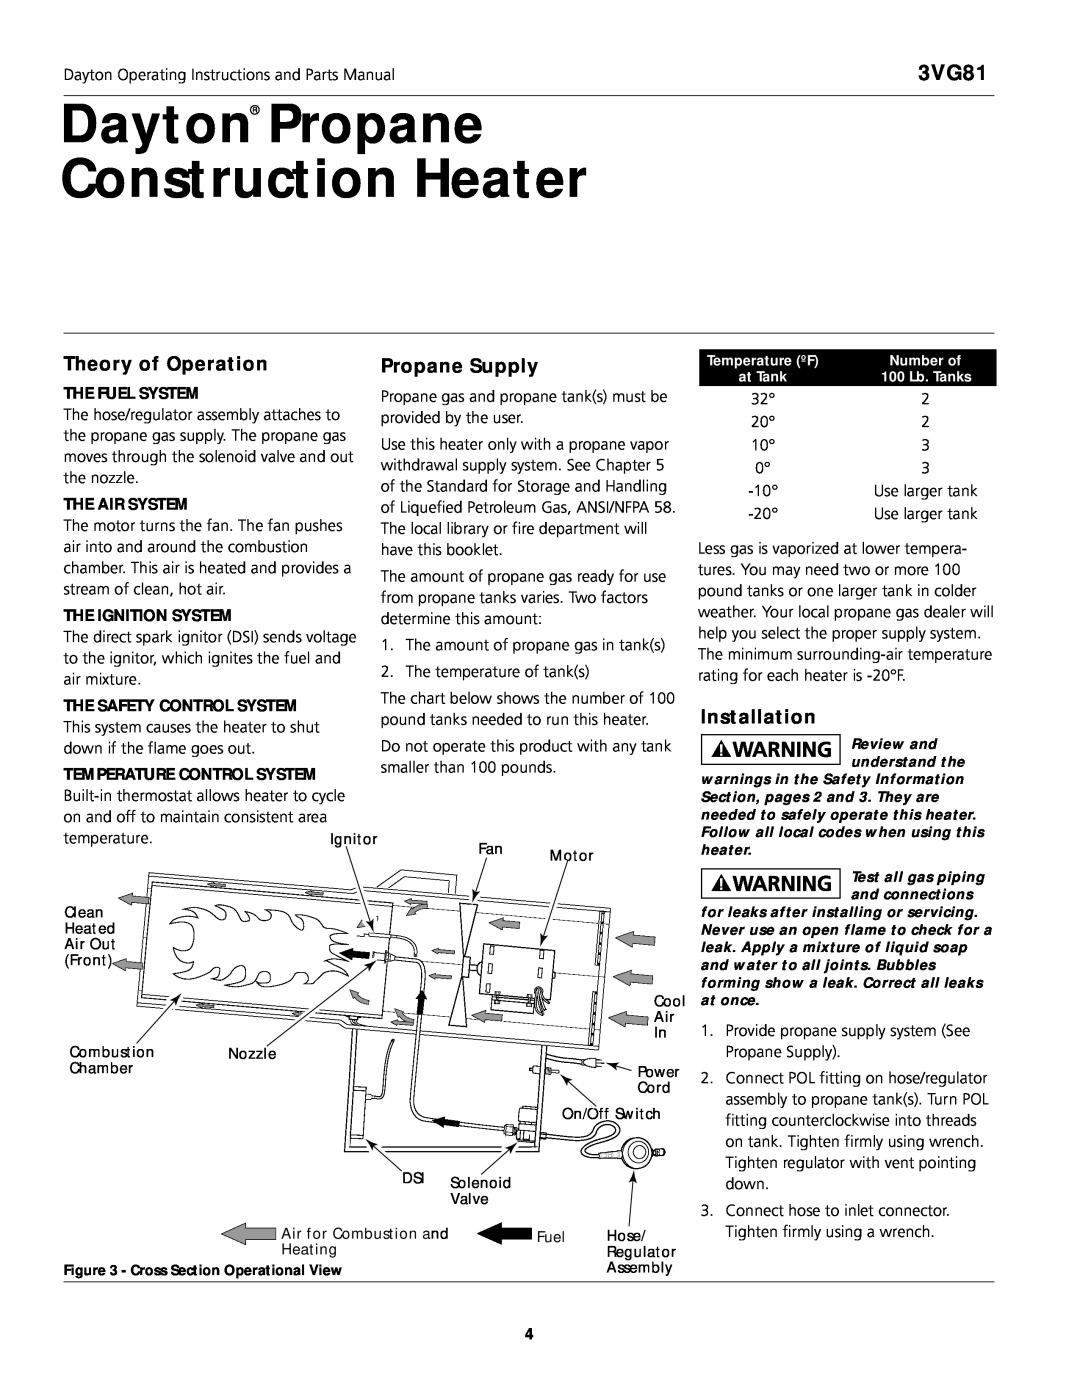 Dayton 3VG81 manual Dayton Propane Construction Heater, Theory of Operation, Propane Supply, Installation, The Fuel System 